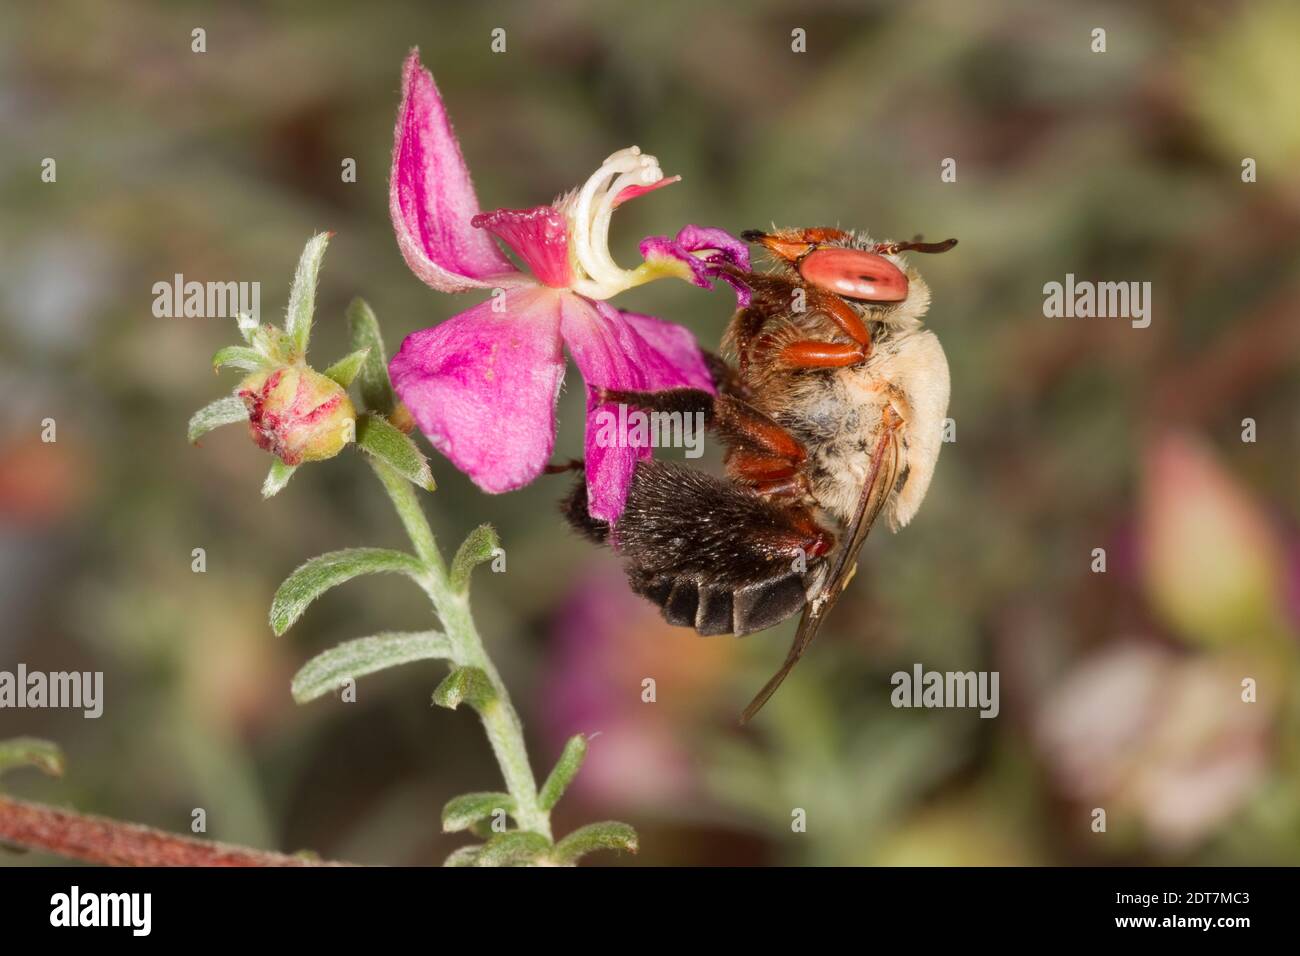 Oil-Digger femmina a zampe rosse, Centris rhodopus, Apidae. Lunghezza corpo 14 mm. Nectaring a Range Ratany, Krameria erecta, Krameriaceae. Foto Stock